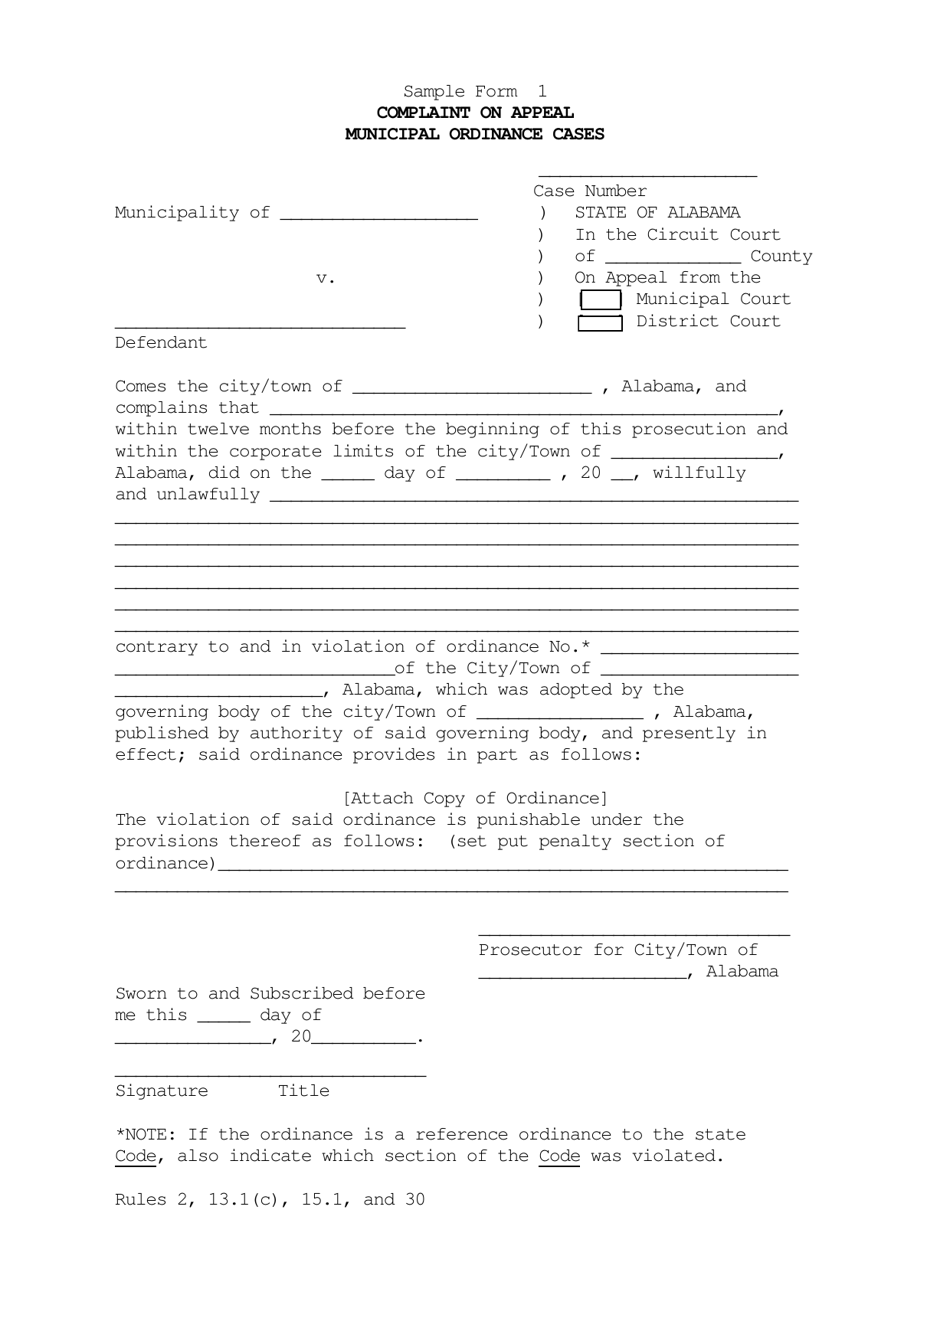 Sample Form 1 Complaint on Appeal Municipal Ordinance Cases - Alabama, Page 1